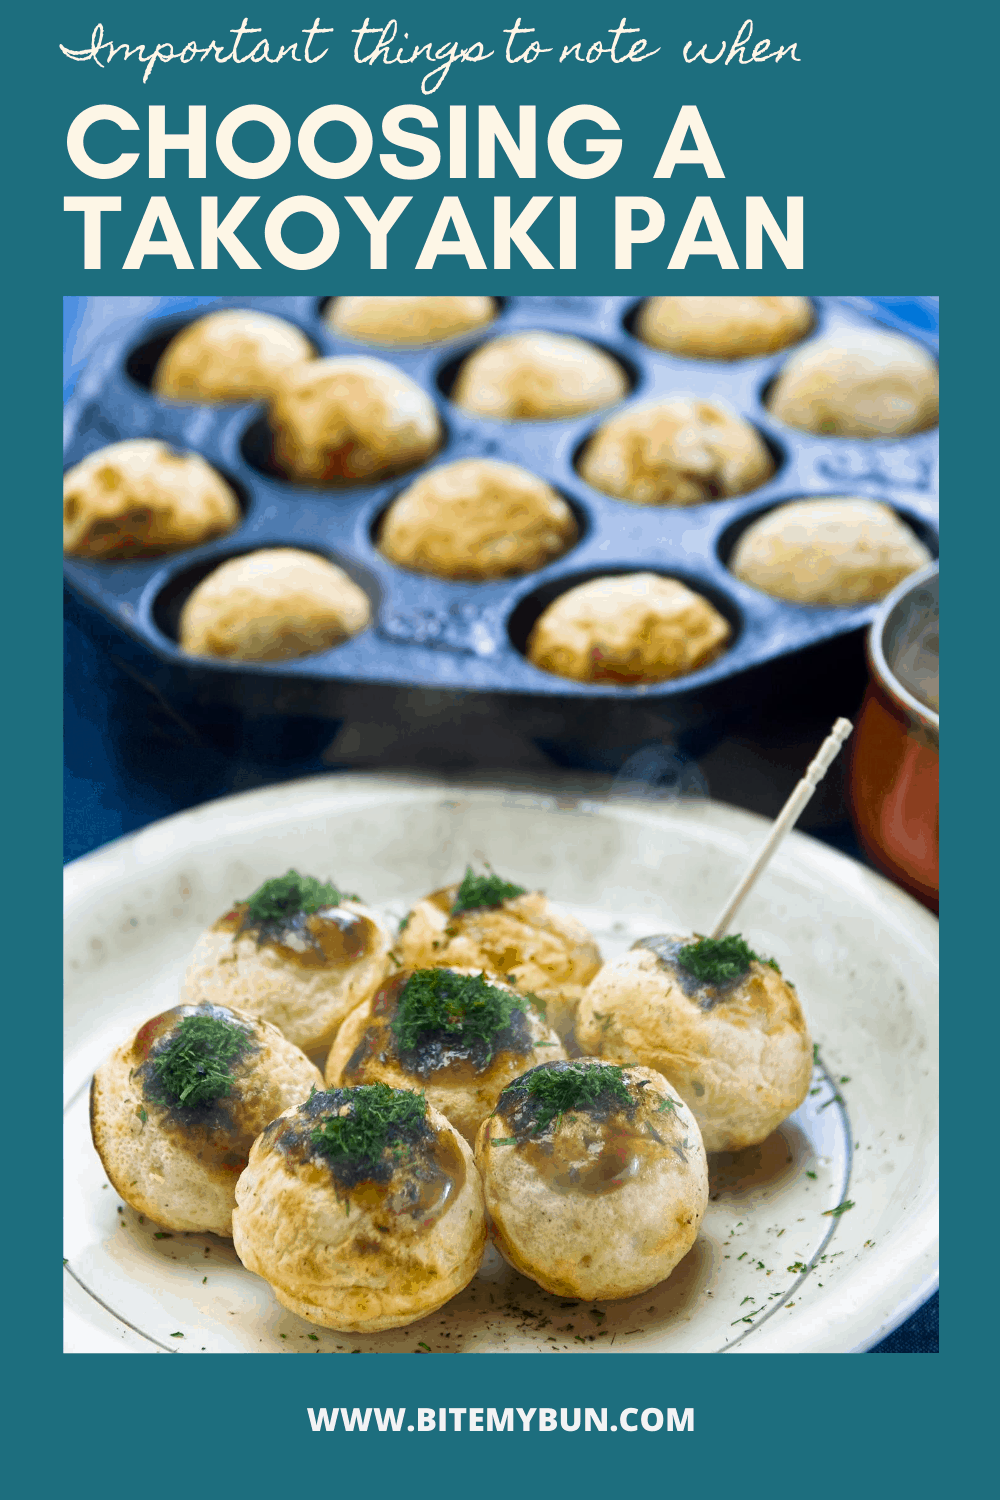 Important things in choosing a takoyaki pan